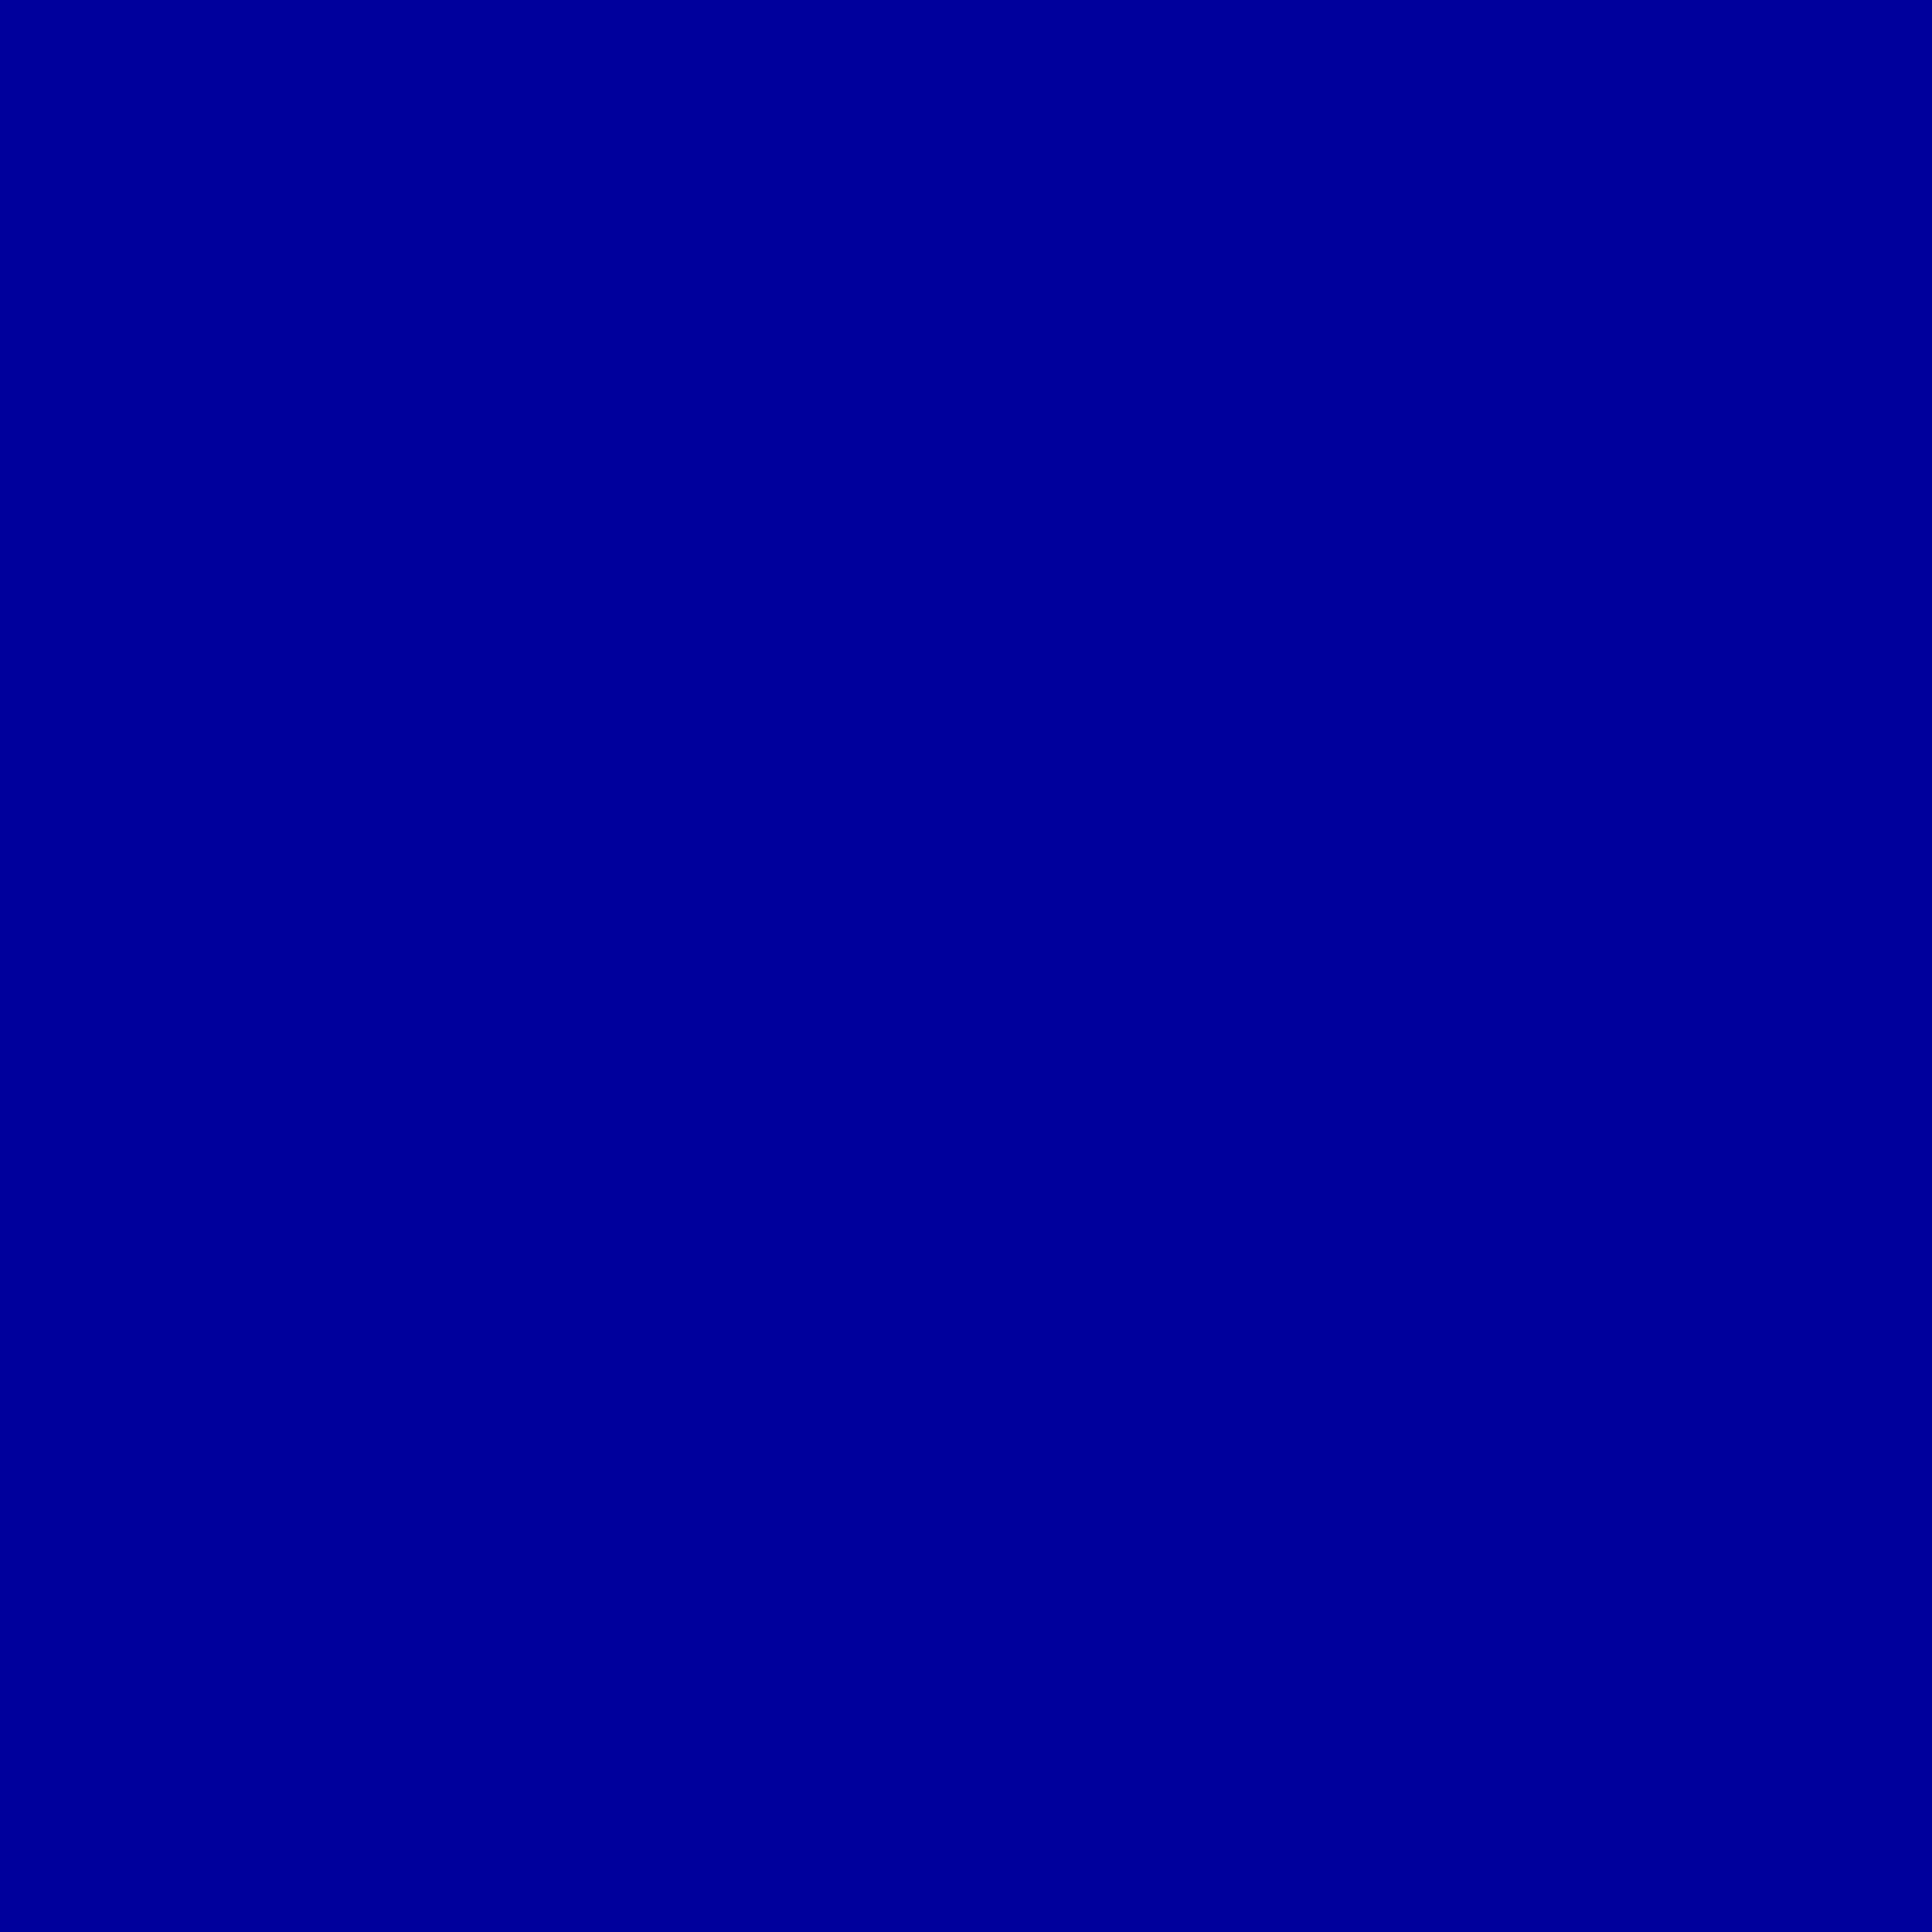 2048x2048 Duke Blue Solid Color Background